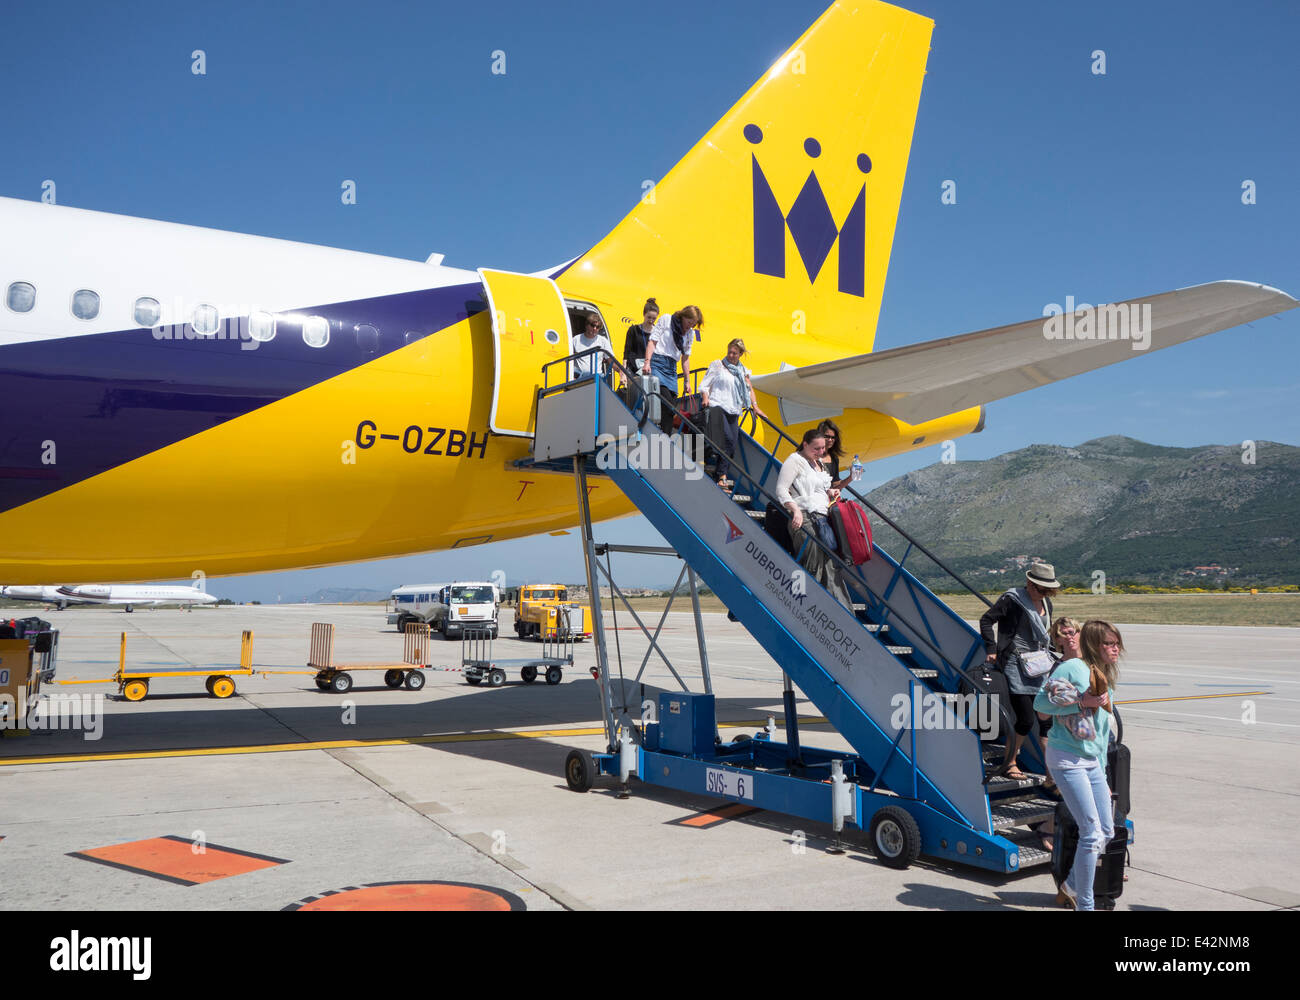 Monarch aircraft at Dubrovnik airport Stock Photo